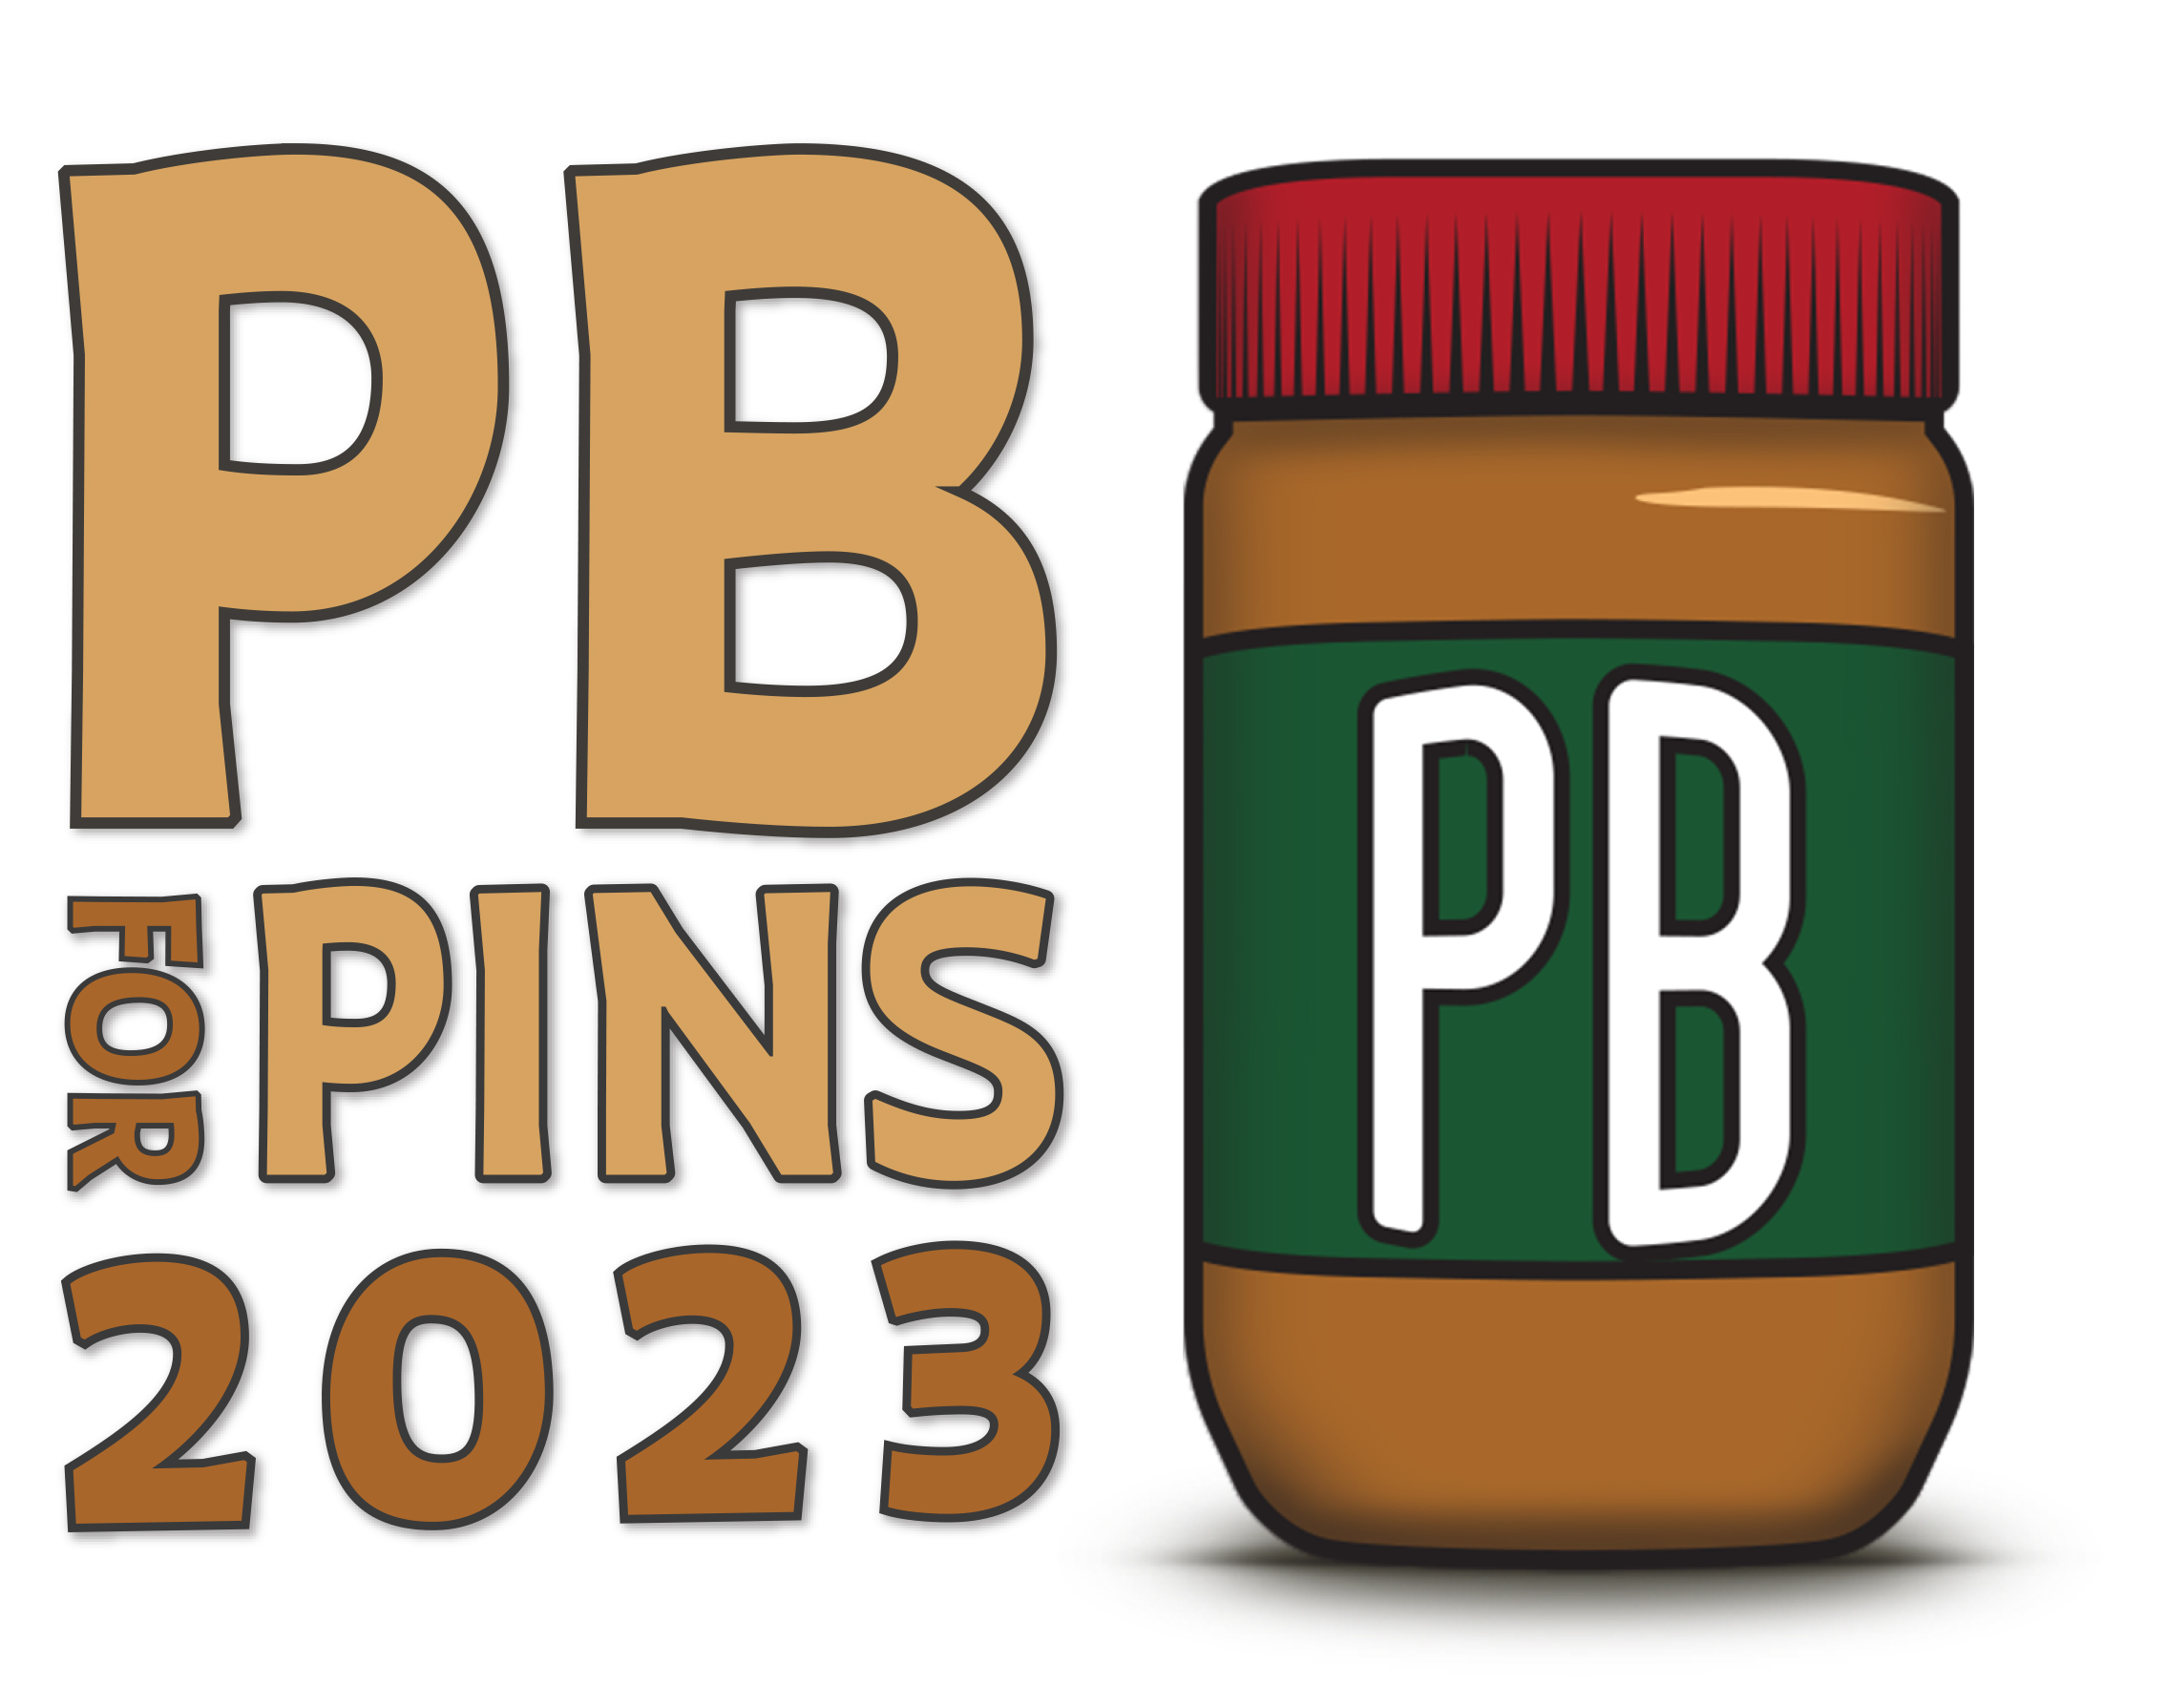 PB For Pins 2023, Jar of Peanut Butter